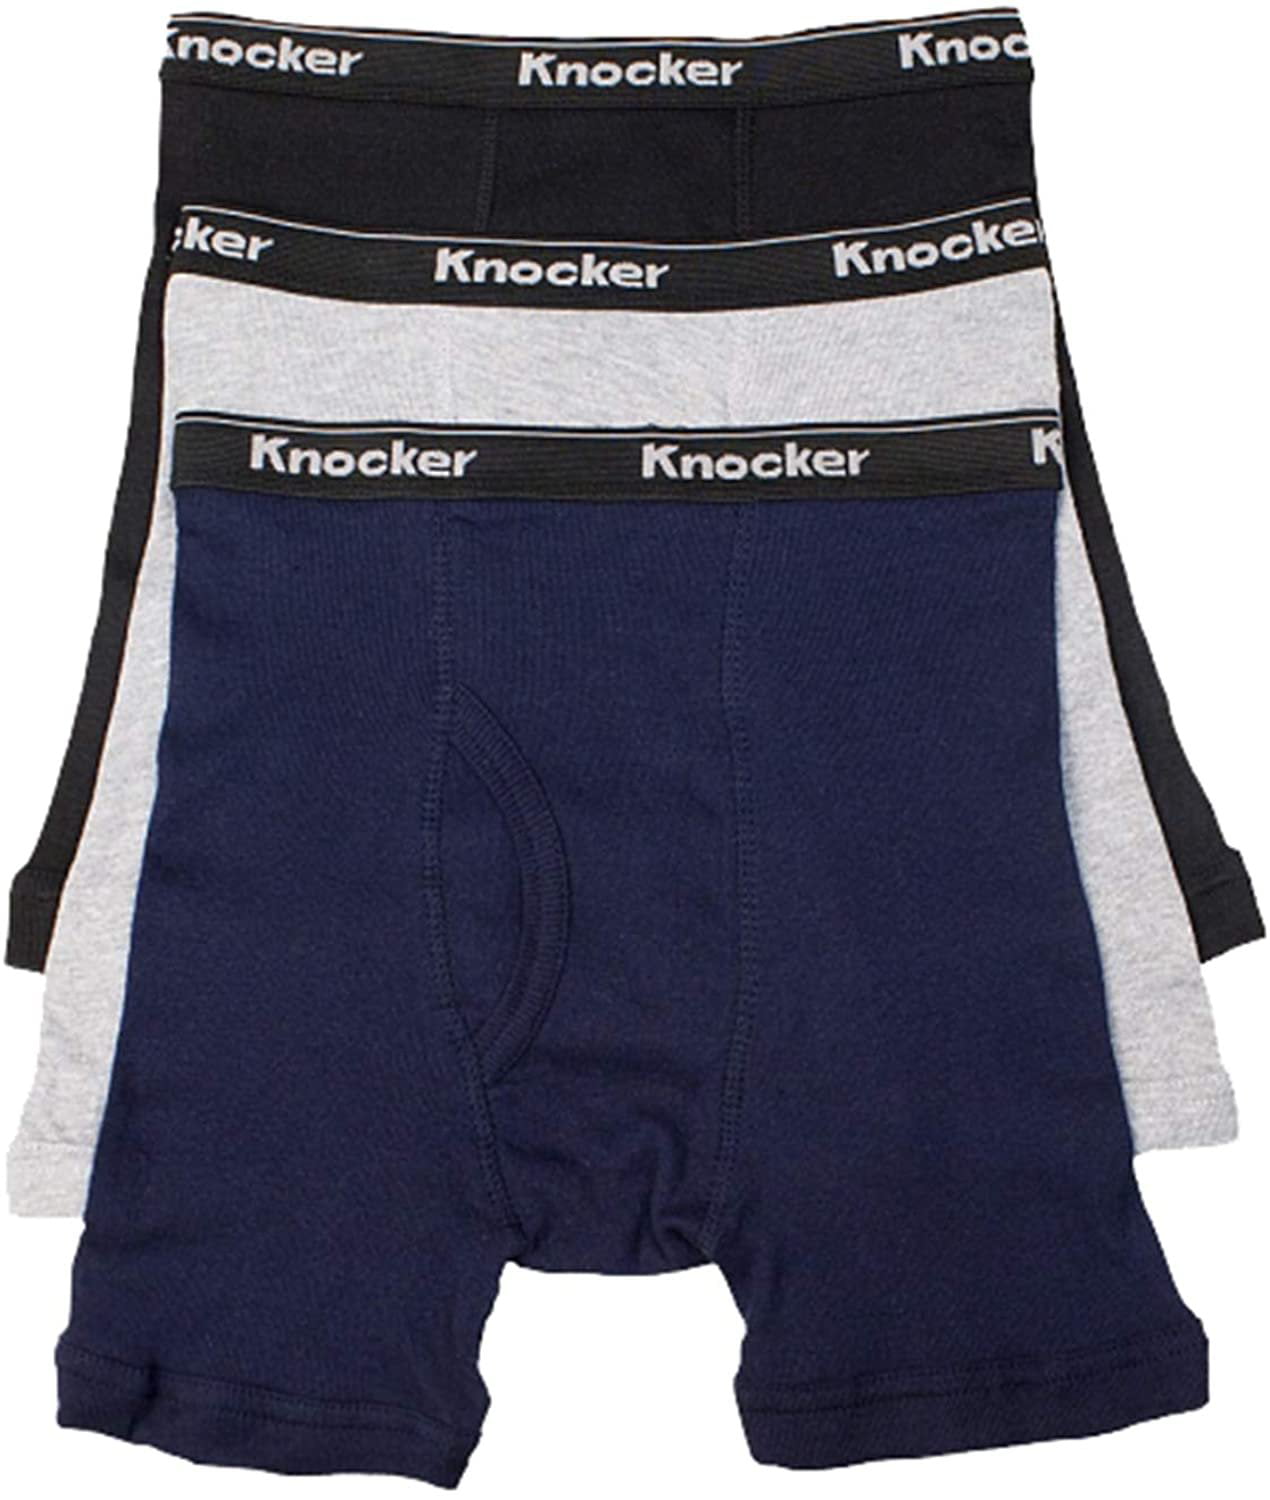 6 pcs Knocker Big Kid Teenager Boy's Color 100% Boxer Briefs S-XL ...